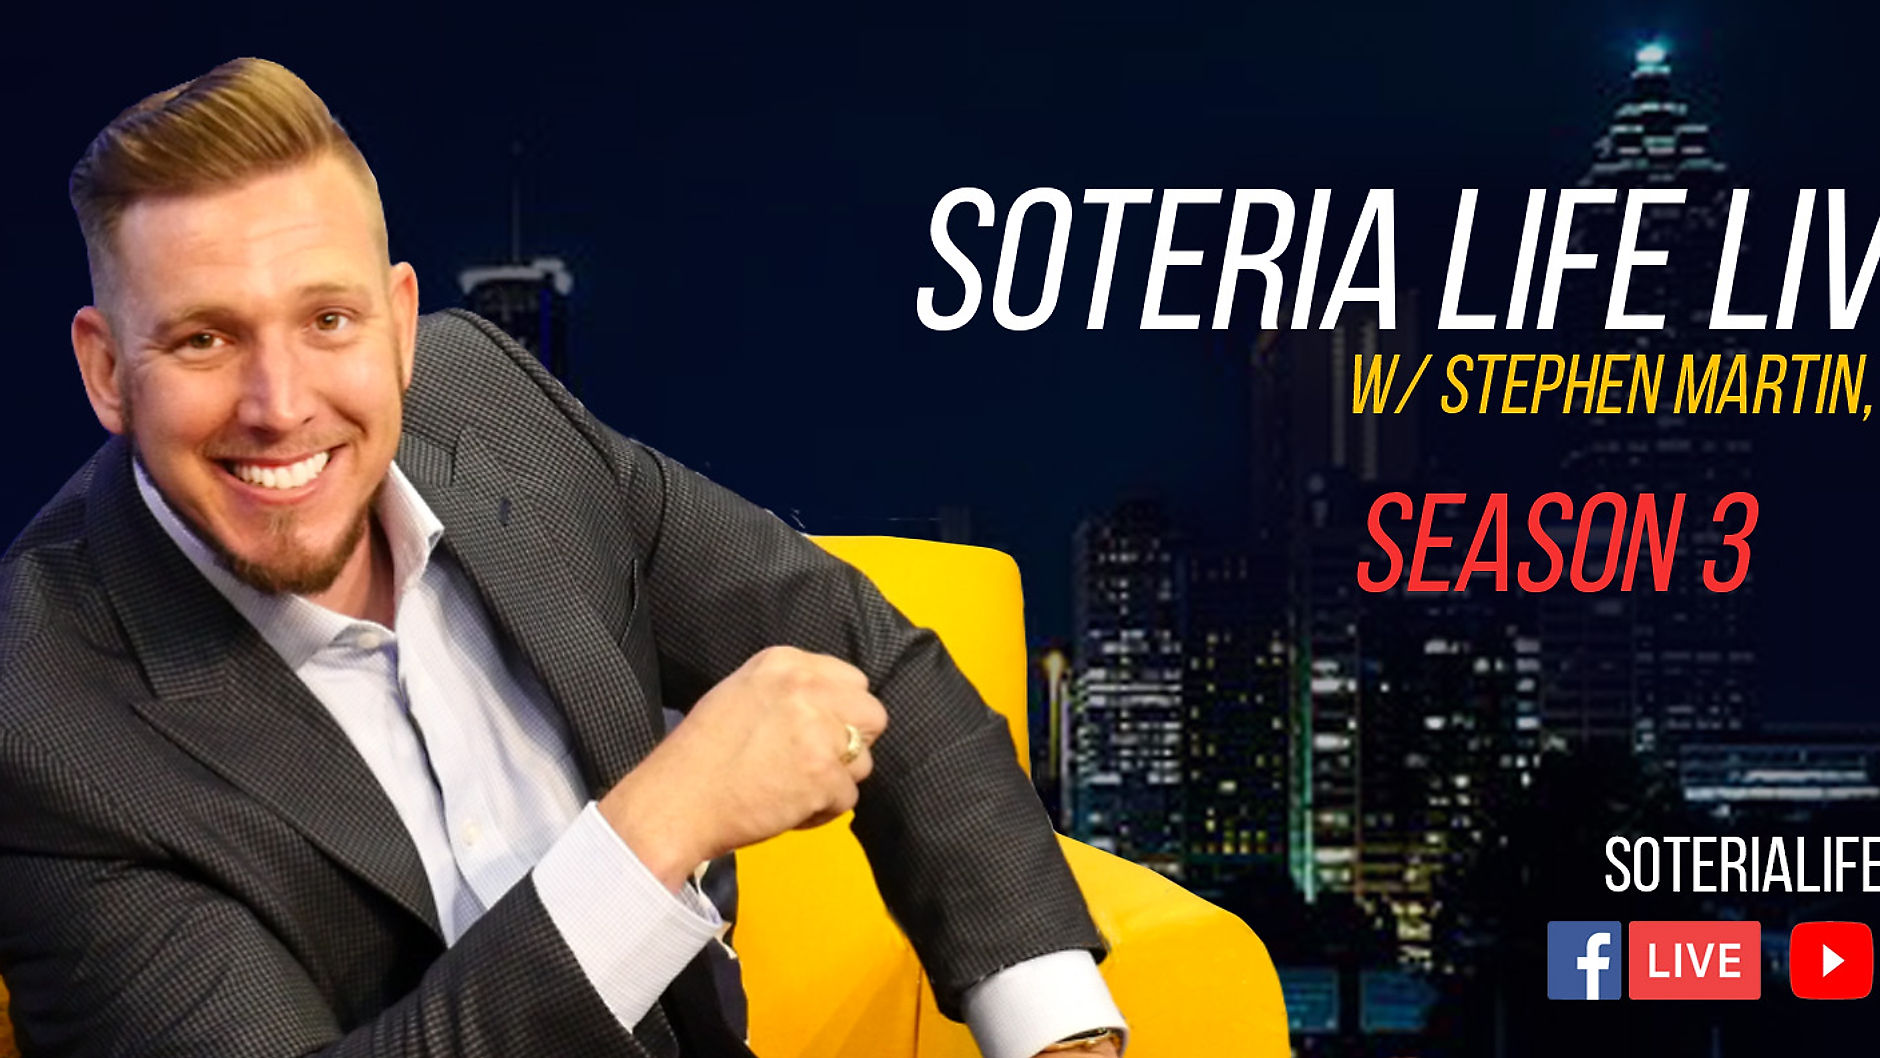 Soteria Life Live - Season 3